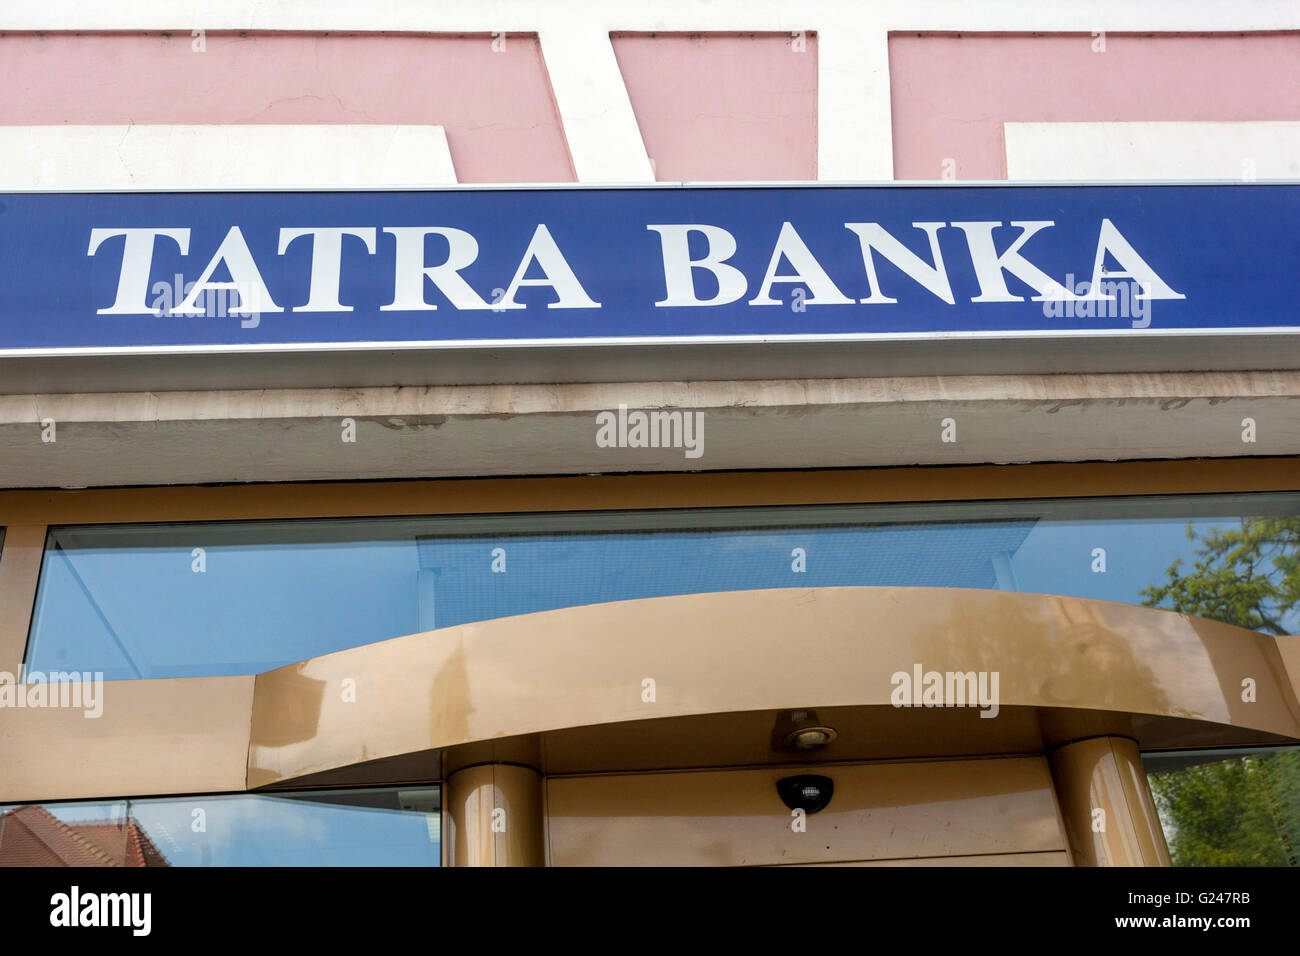 Tatra Banka segno, Slovacchia, Europa Foto Stock